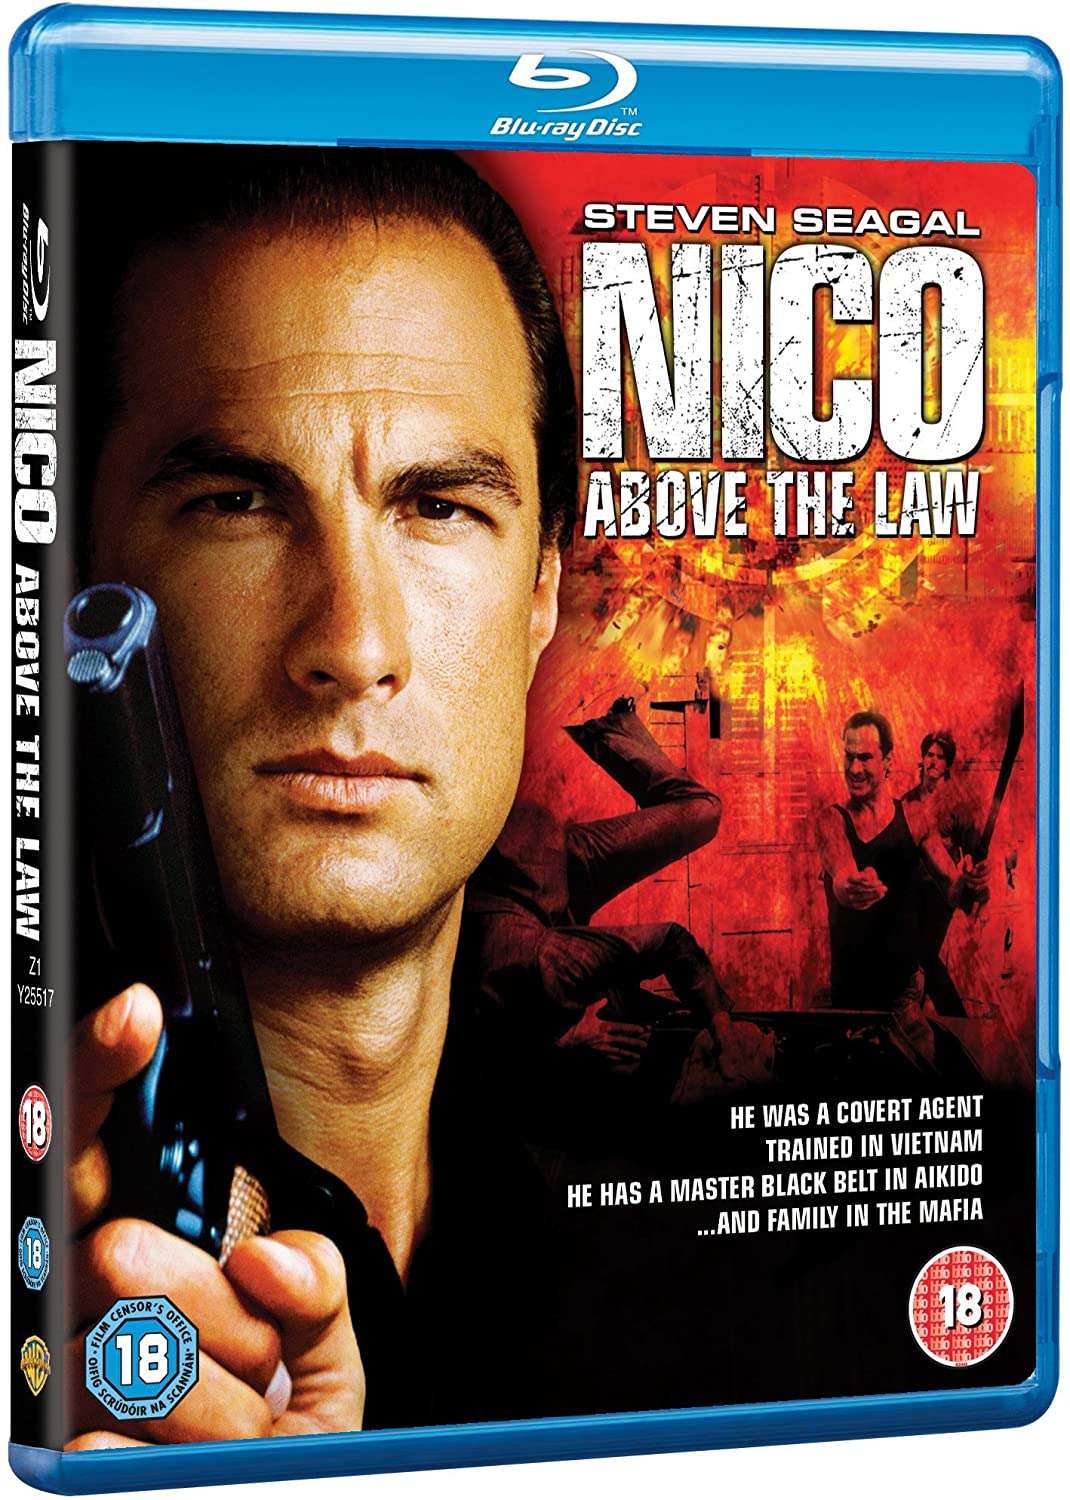 Stiahni si HD Filmy Nico - vic nez zakon / Above the Law (1988)(Remastered)(BluRay)(1080p)(3xCZ/2xEN) = CSFD 63%